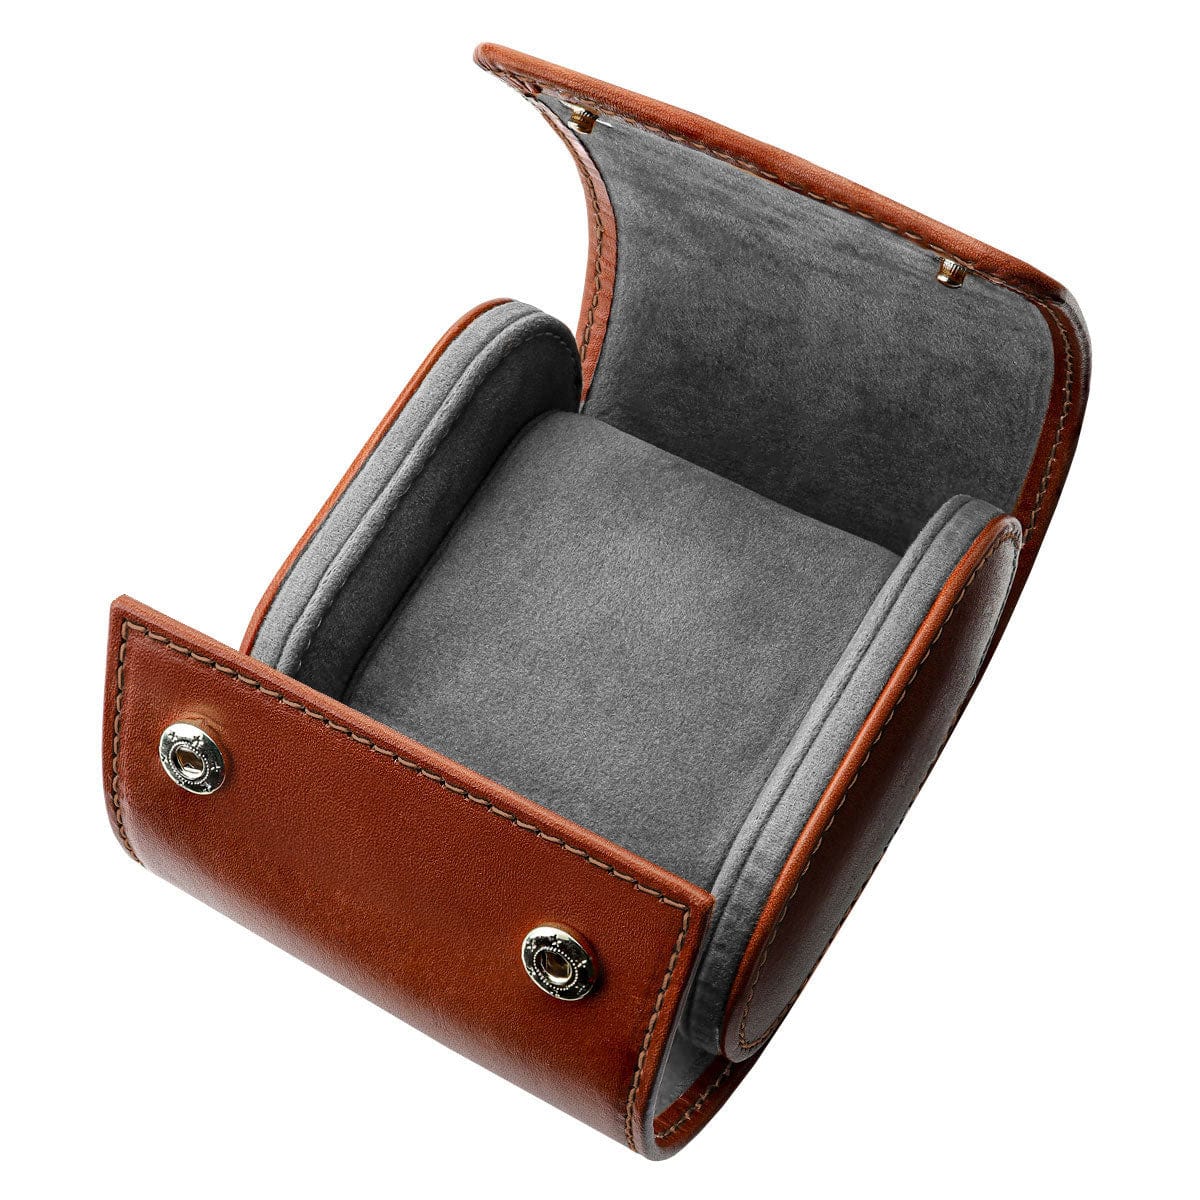 Geckota Genuine Leather Watch Box - Brown